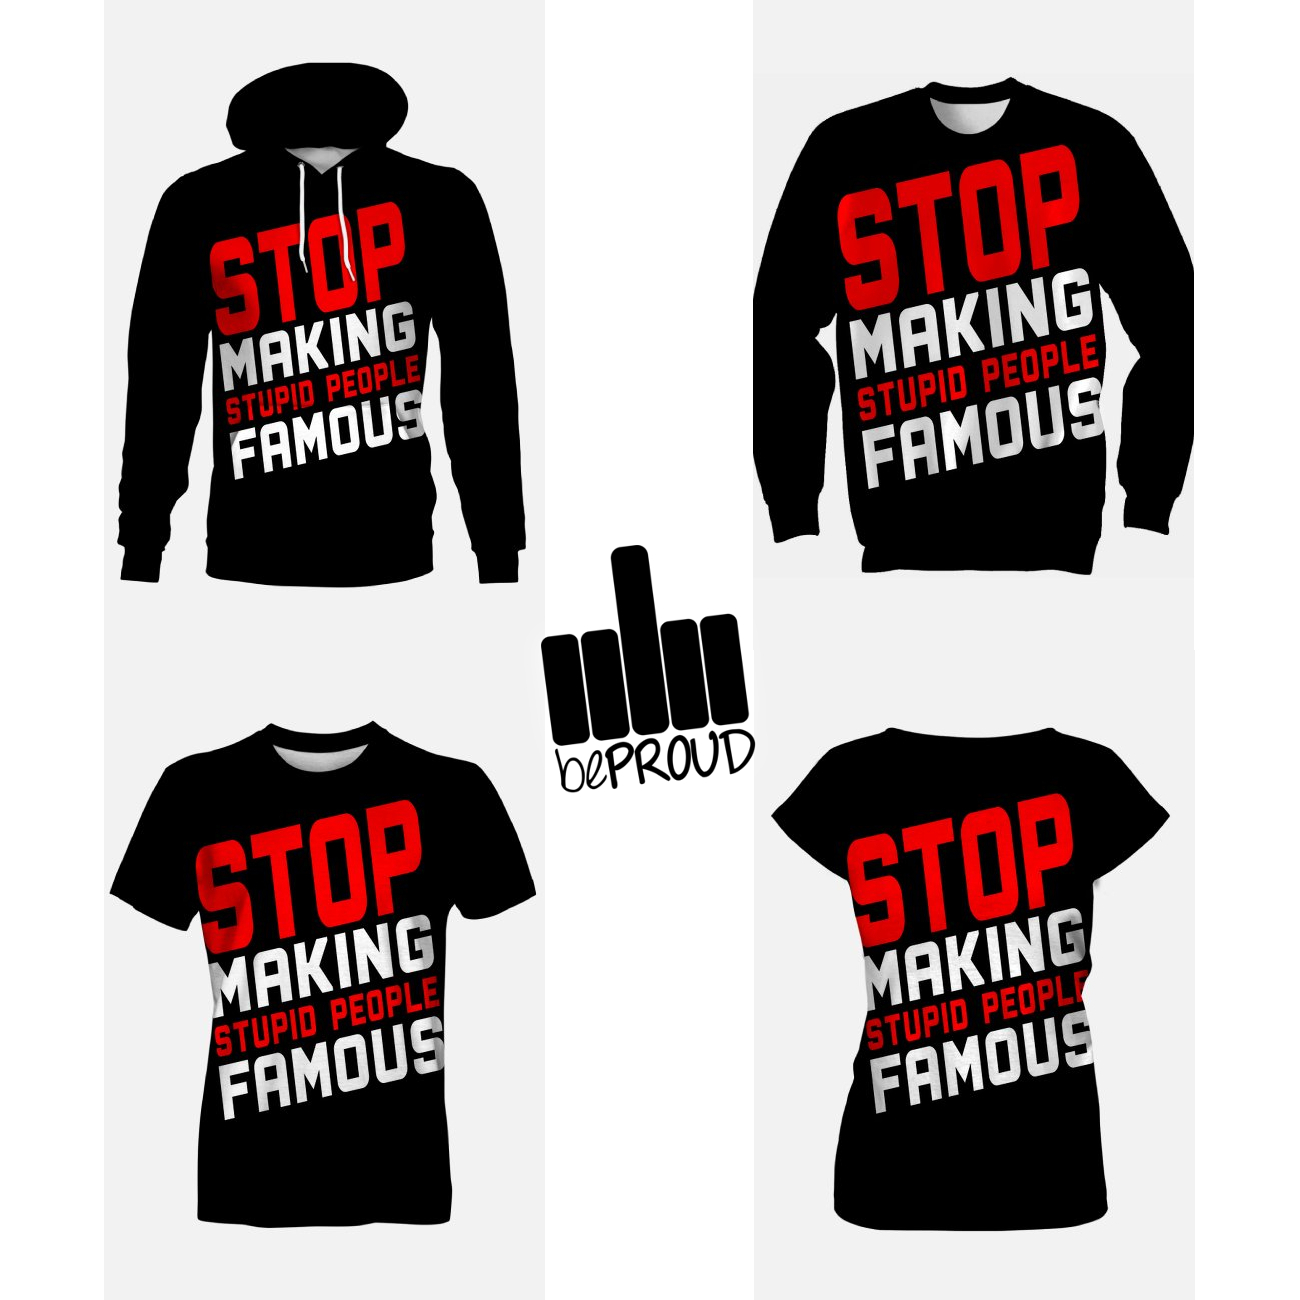 Stop Making Stupid People Famous - koszulki z nadrukiem